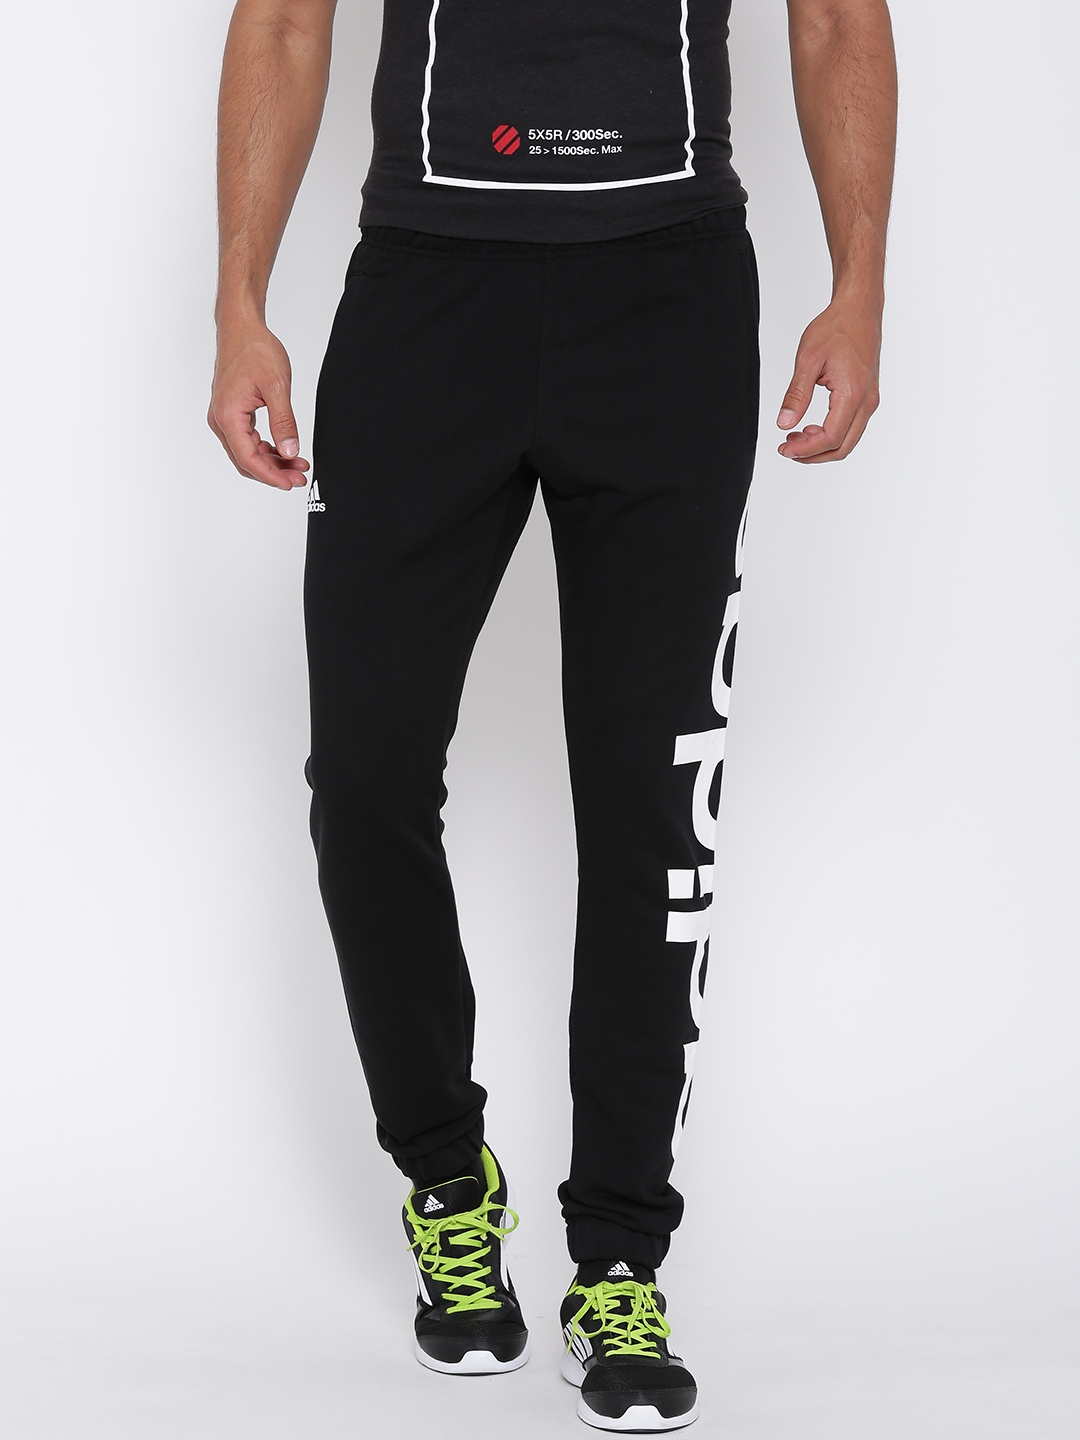 Adidas Boys FleeceLined Athletic WarmUp Track Pant RoyalGreen L1416   Walmartcom